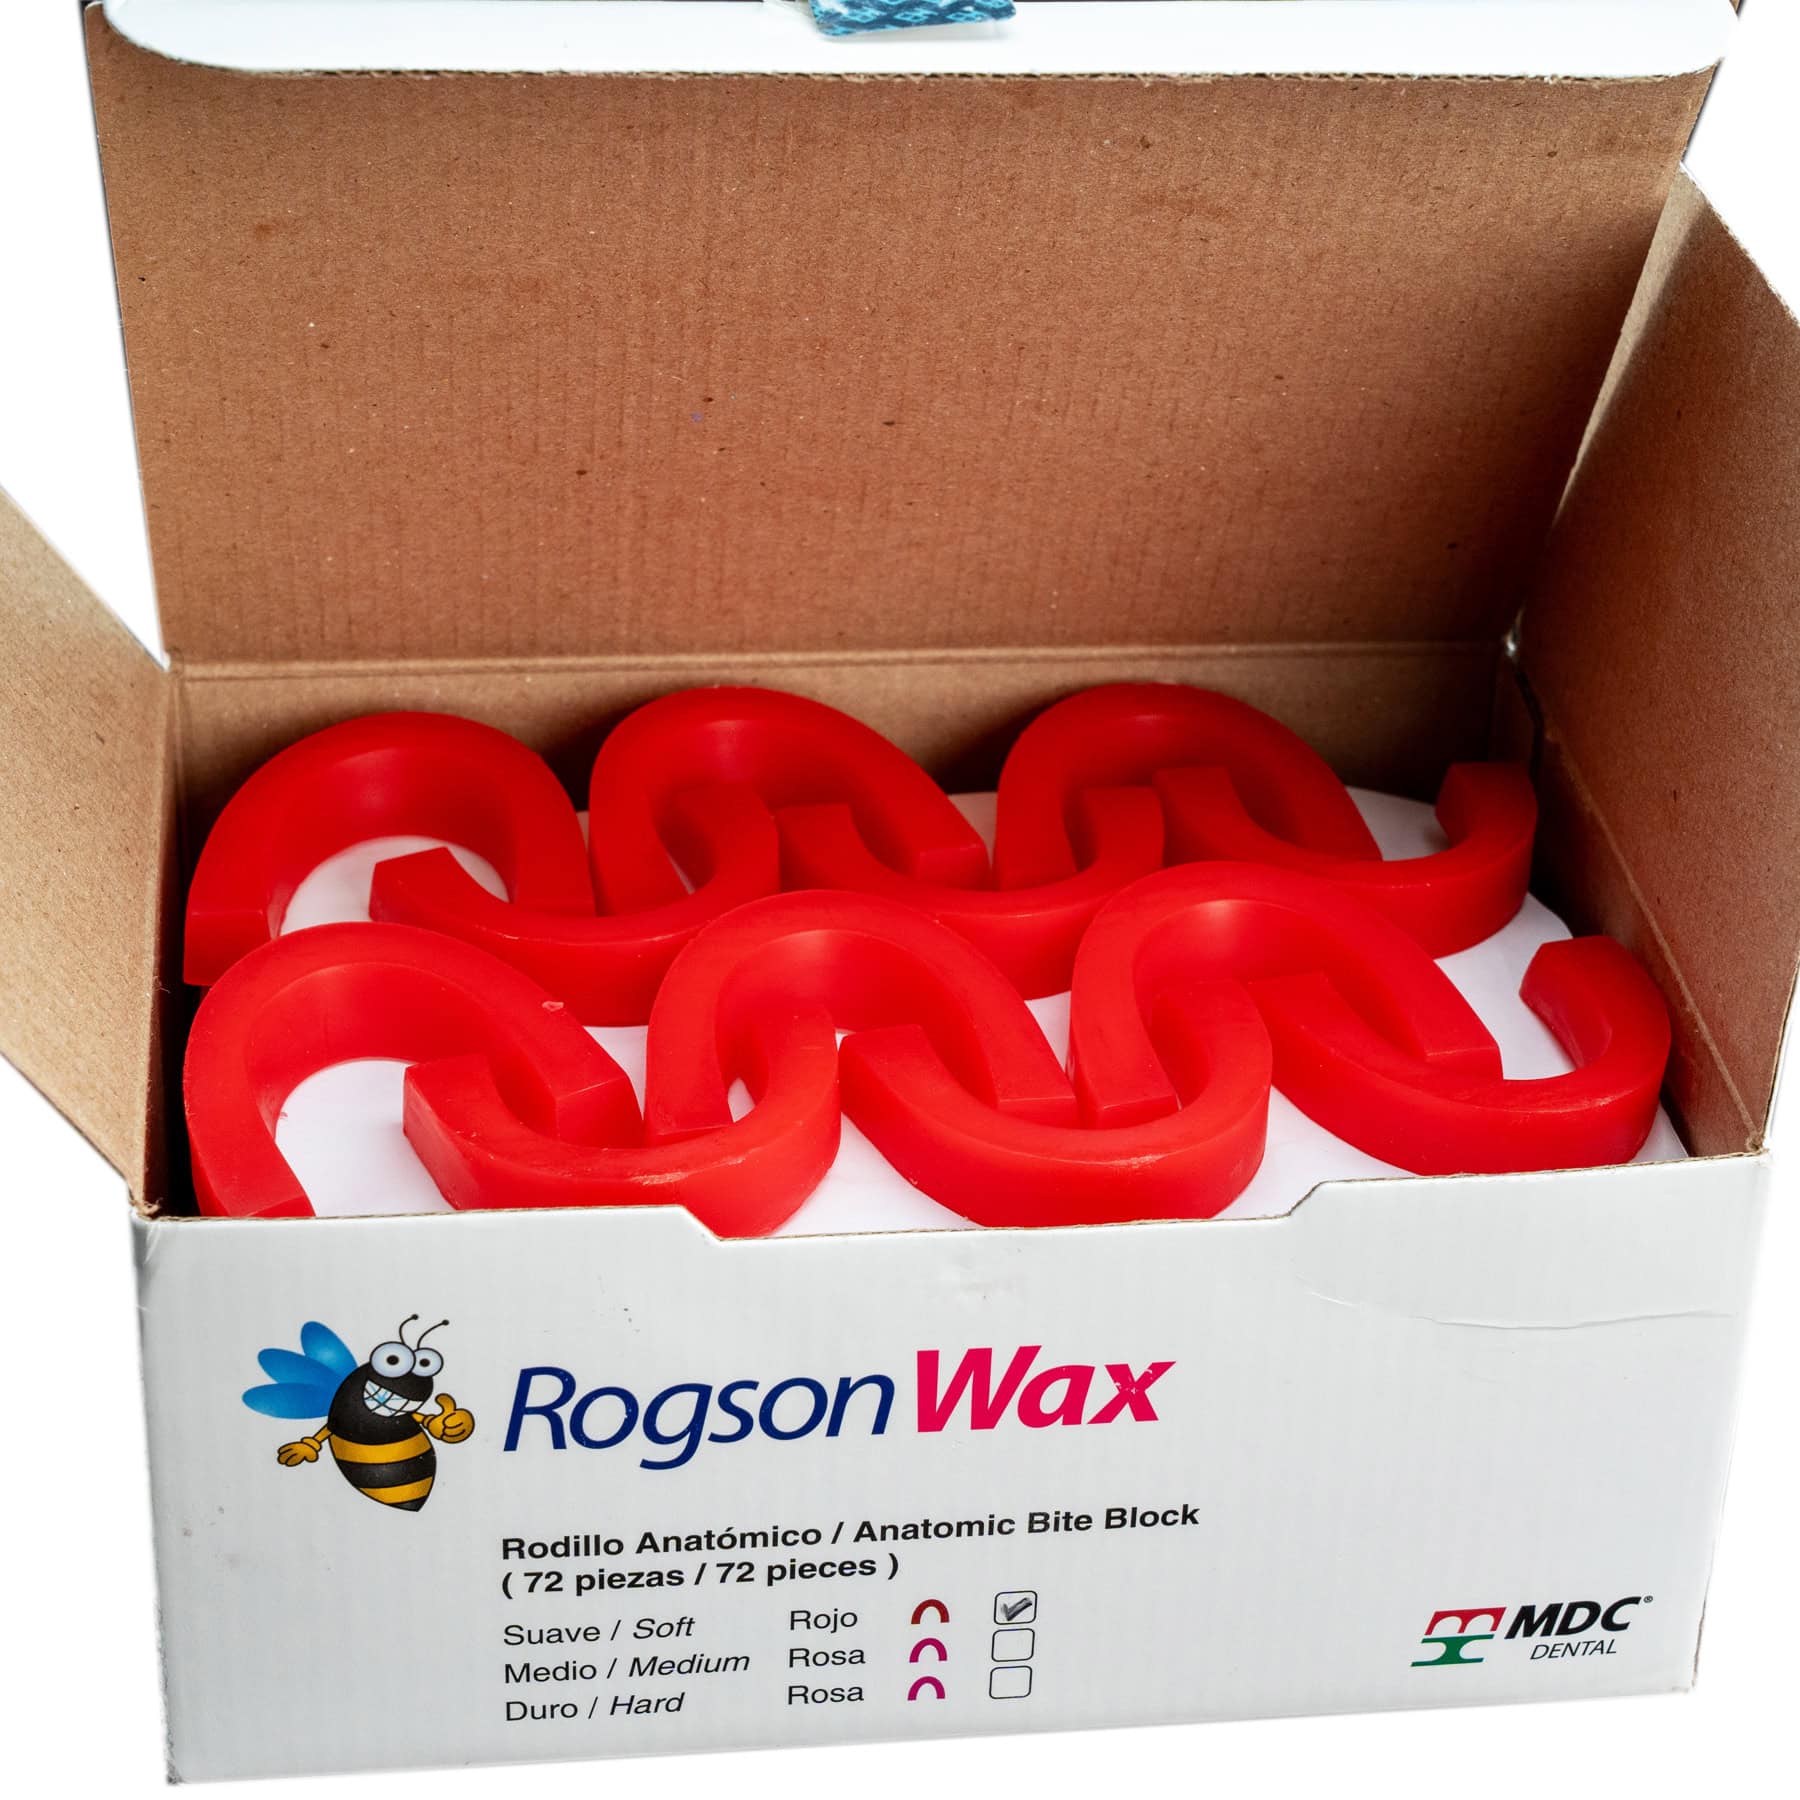 Rogxon Wax, Anatomic Bite Block/Rodillo anatomico, Soft/Suave, Red/Rojo, 72 pcs/box